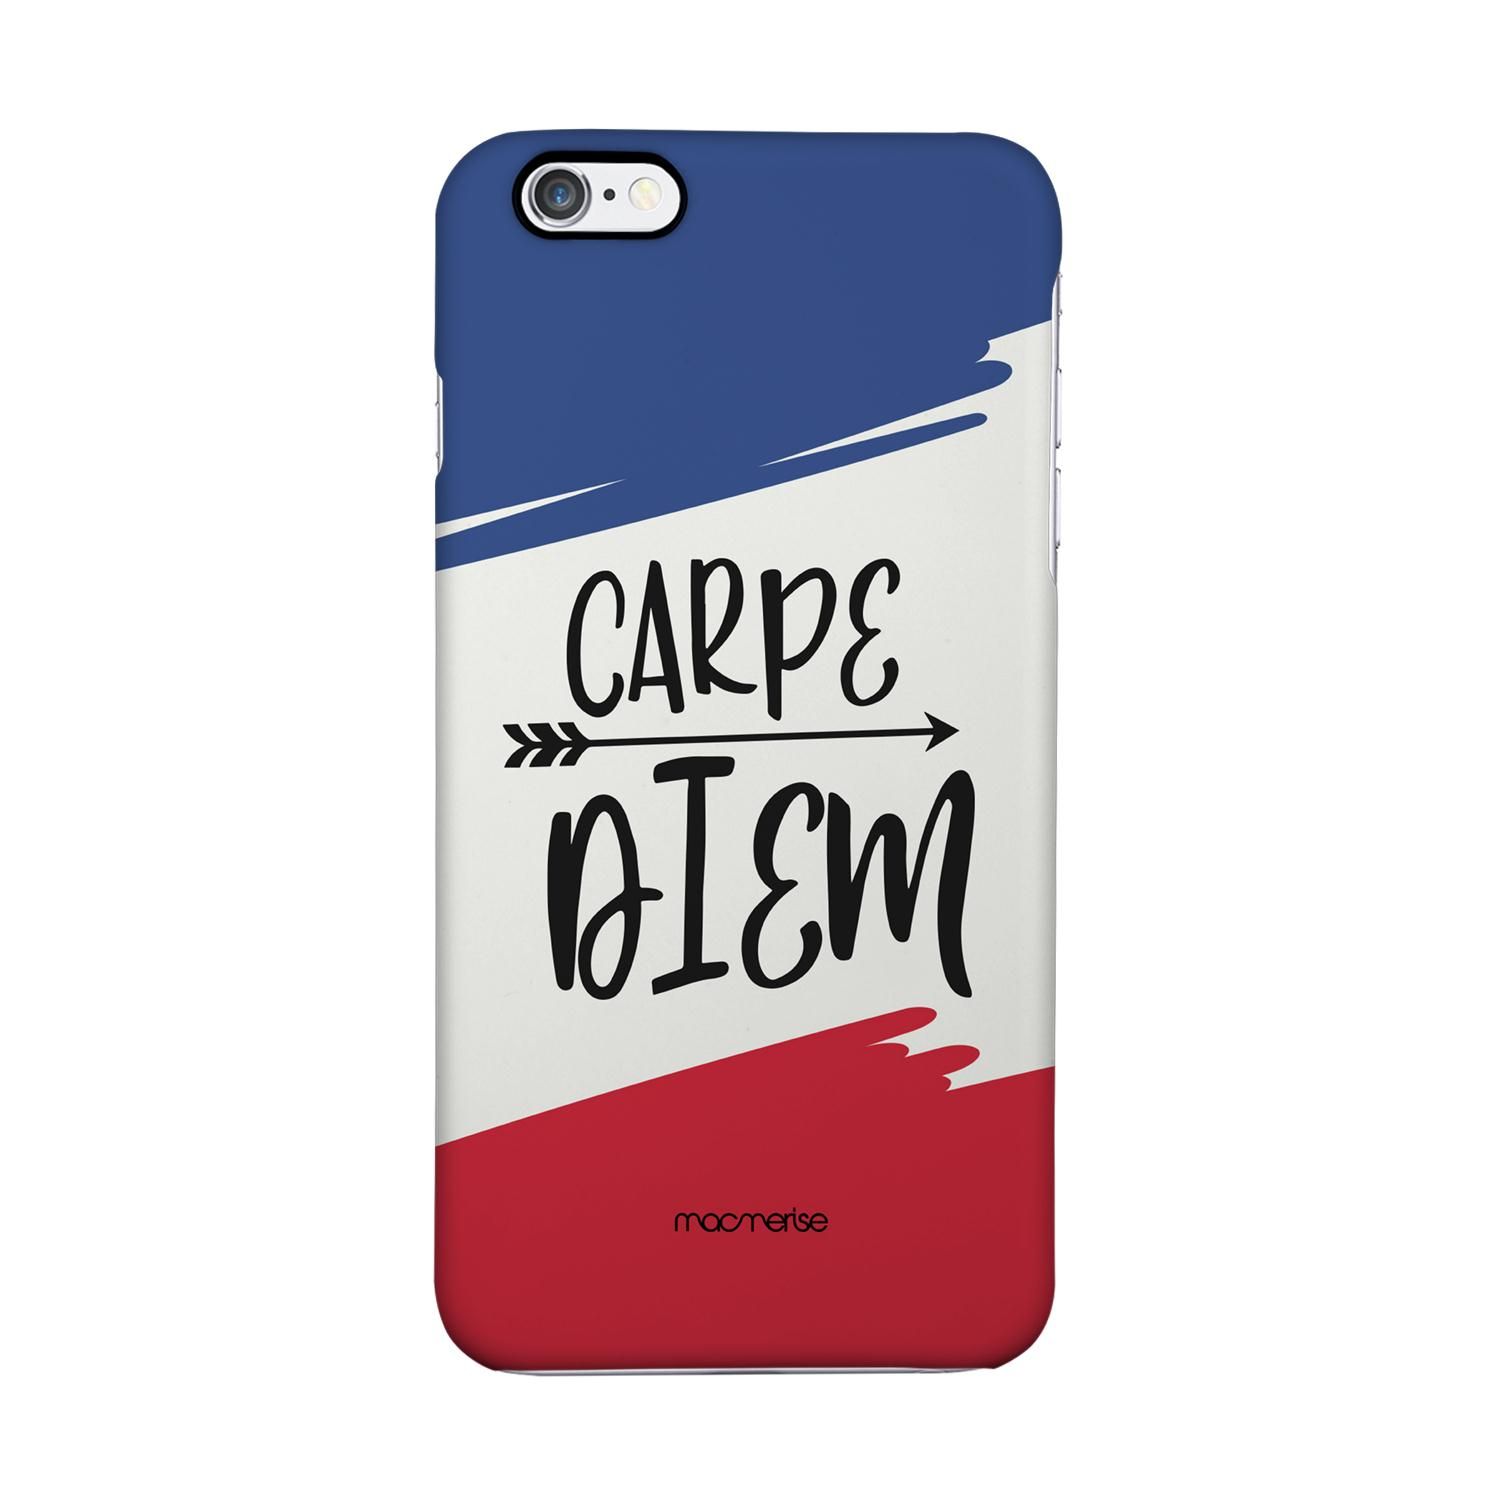 Carpe Diem - Sleek Case for iPhone 6 Plus